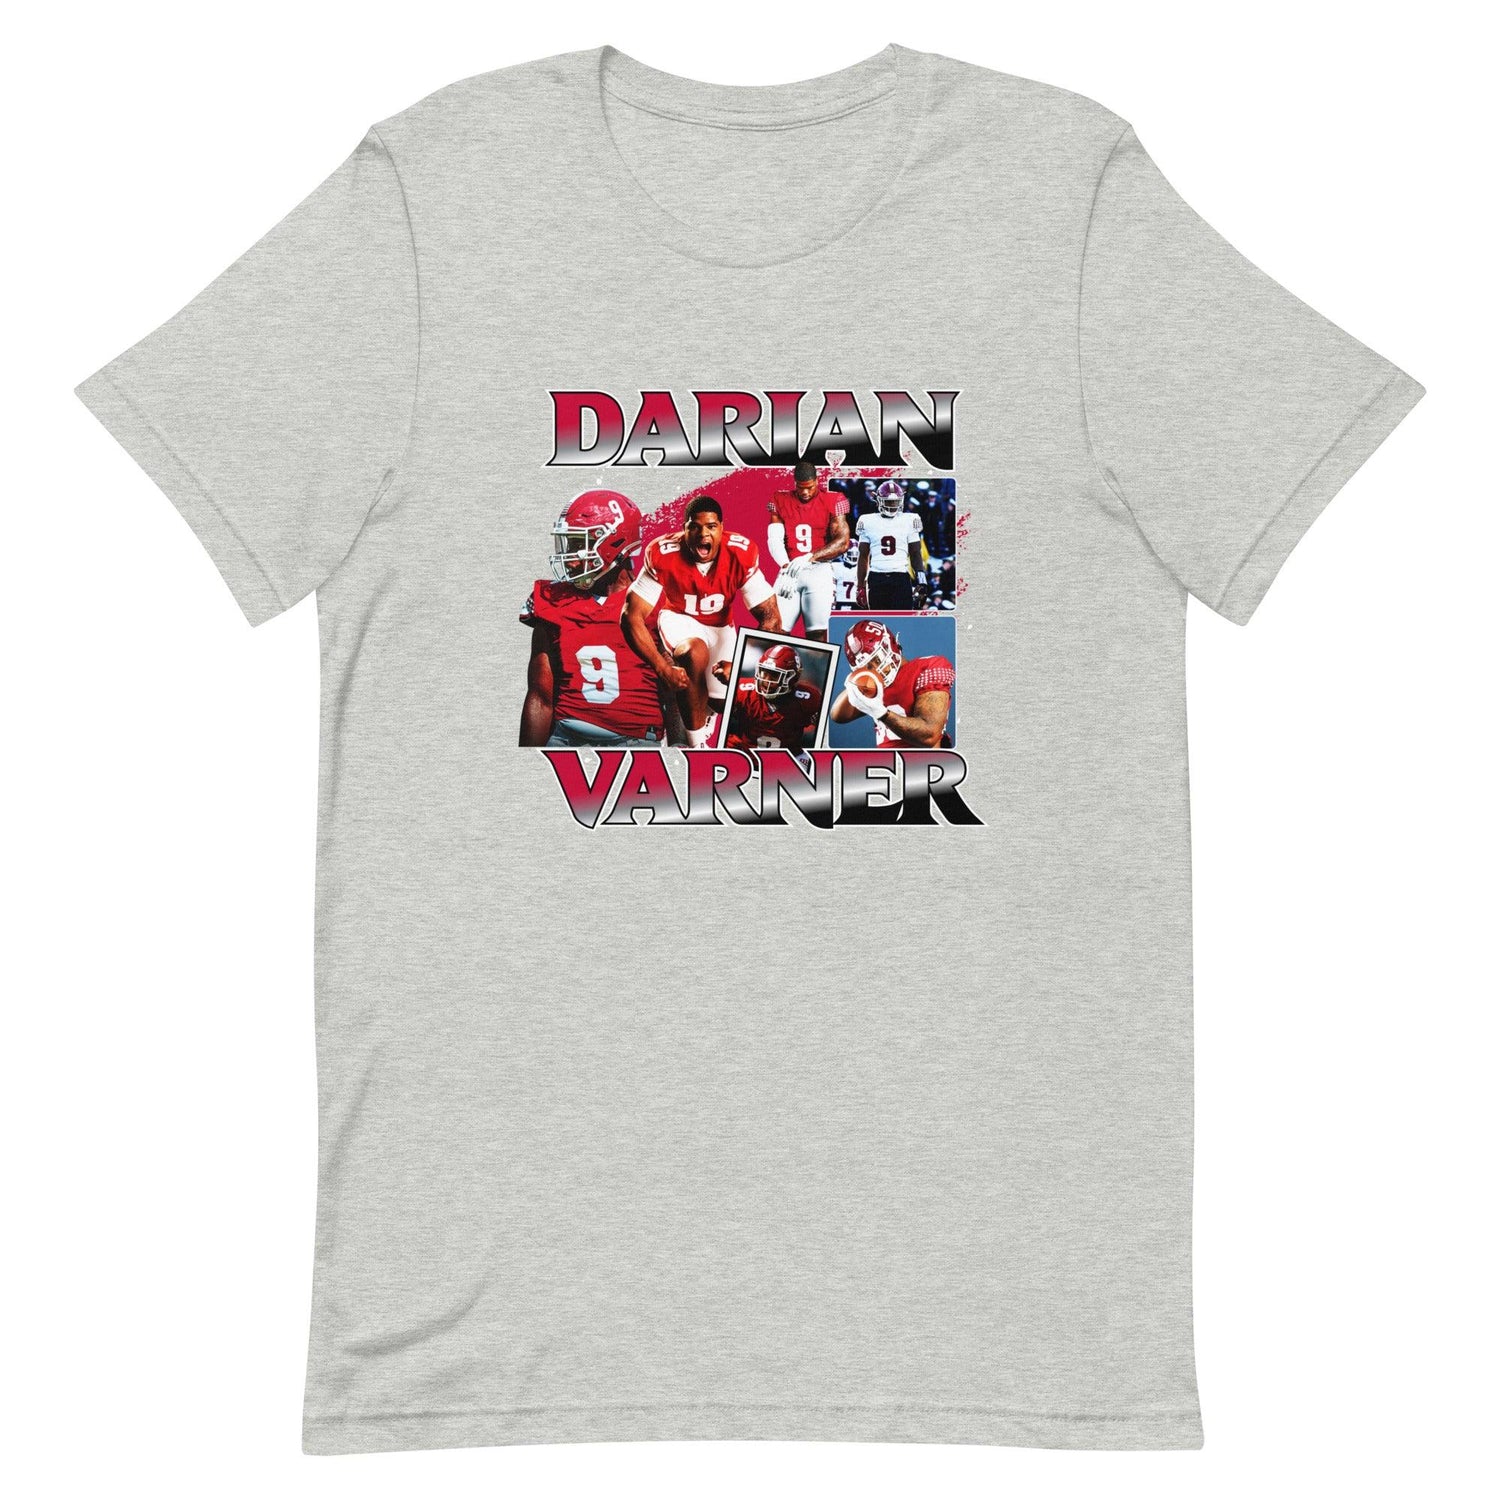 Darian Varner "Vintage" t-shirt - Fan Arch